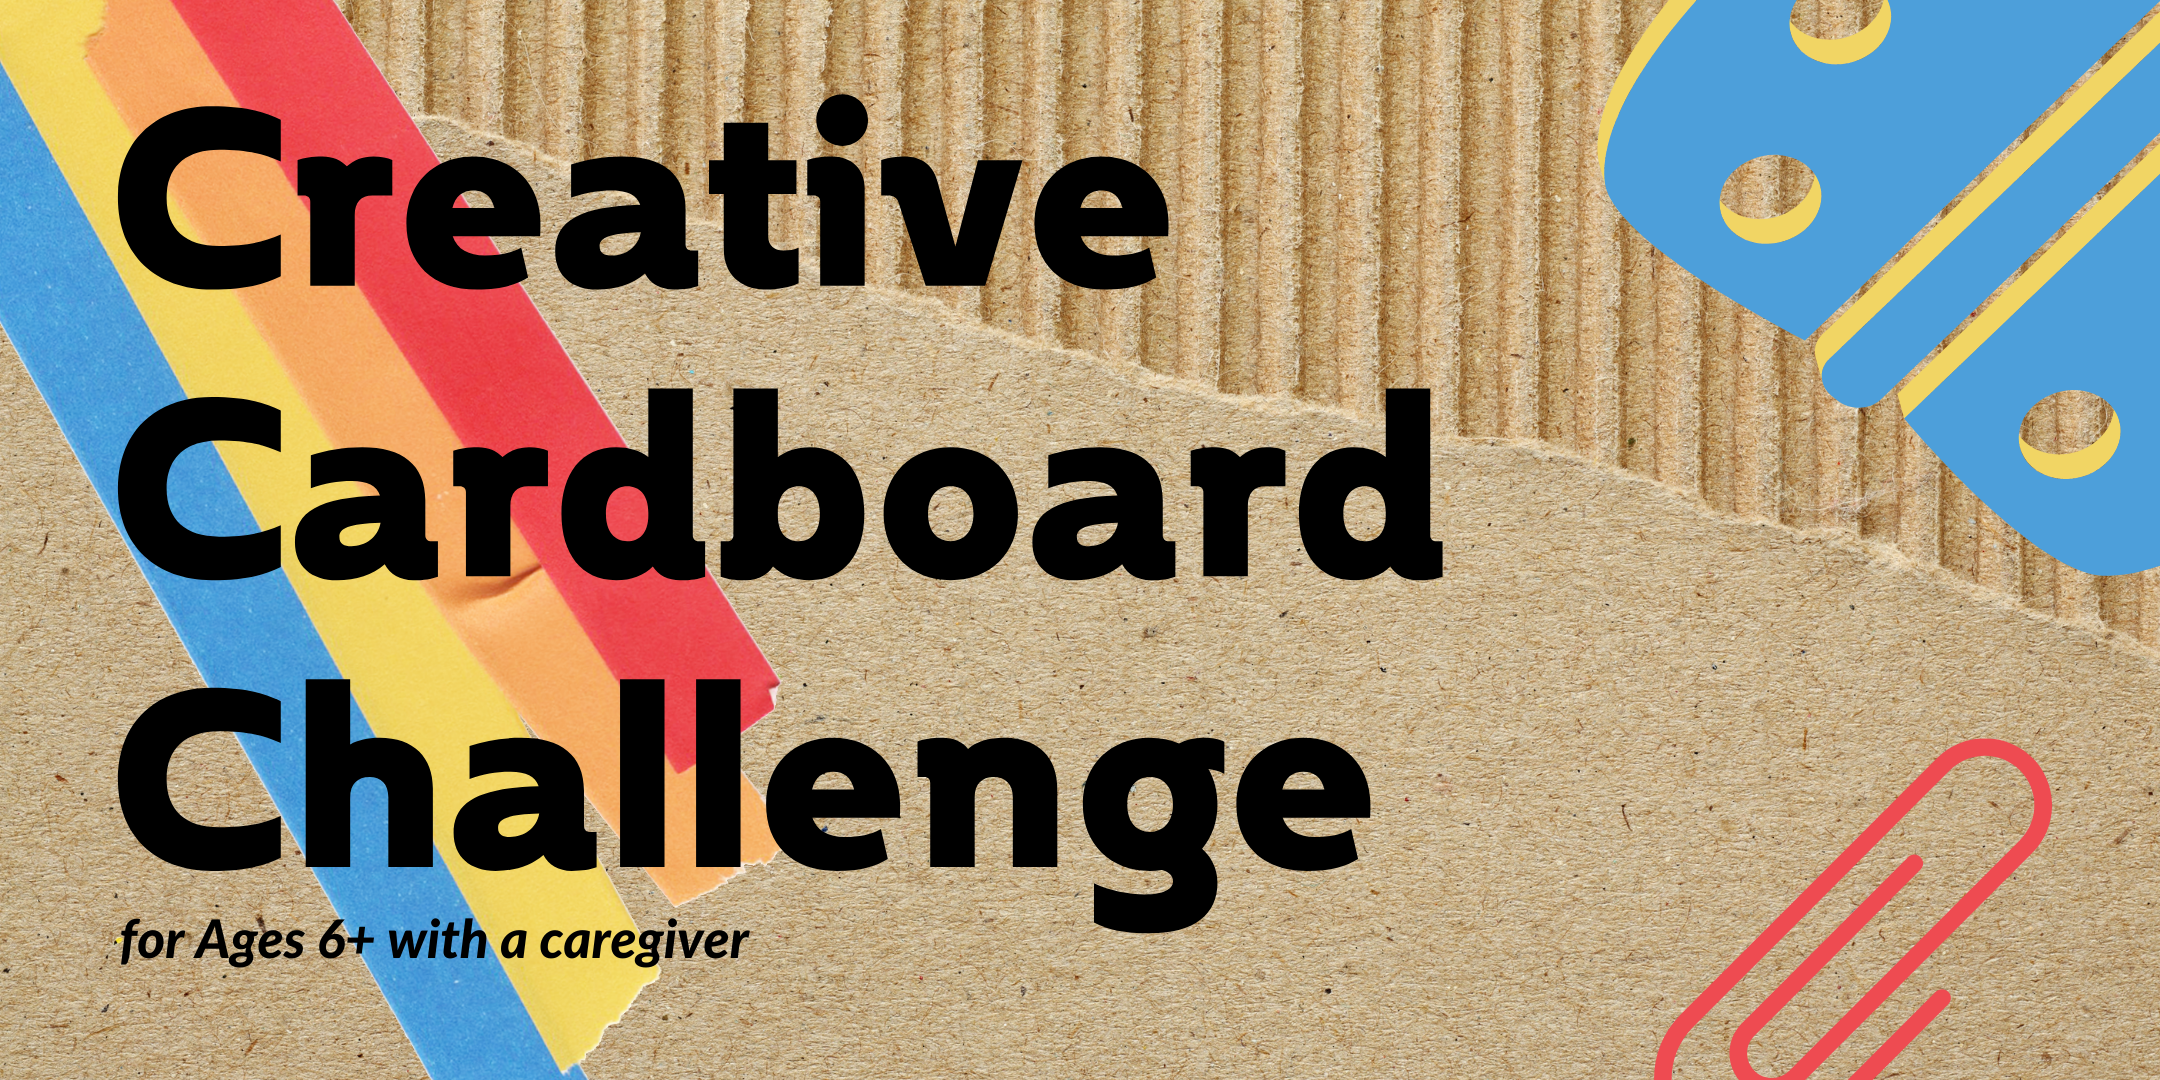 image of "Creative Cardboard Challenge"